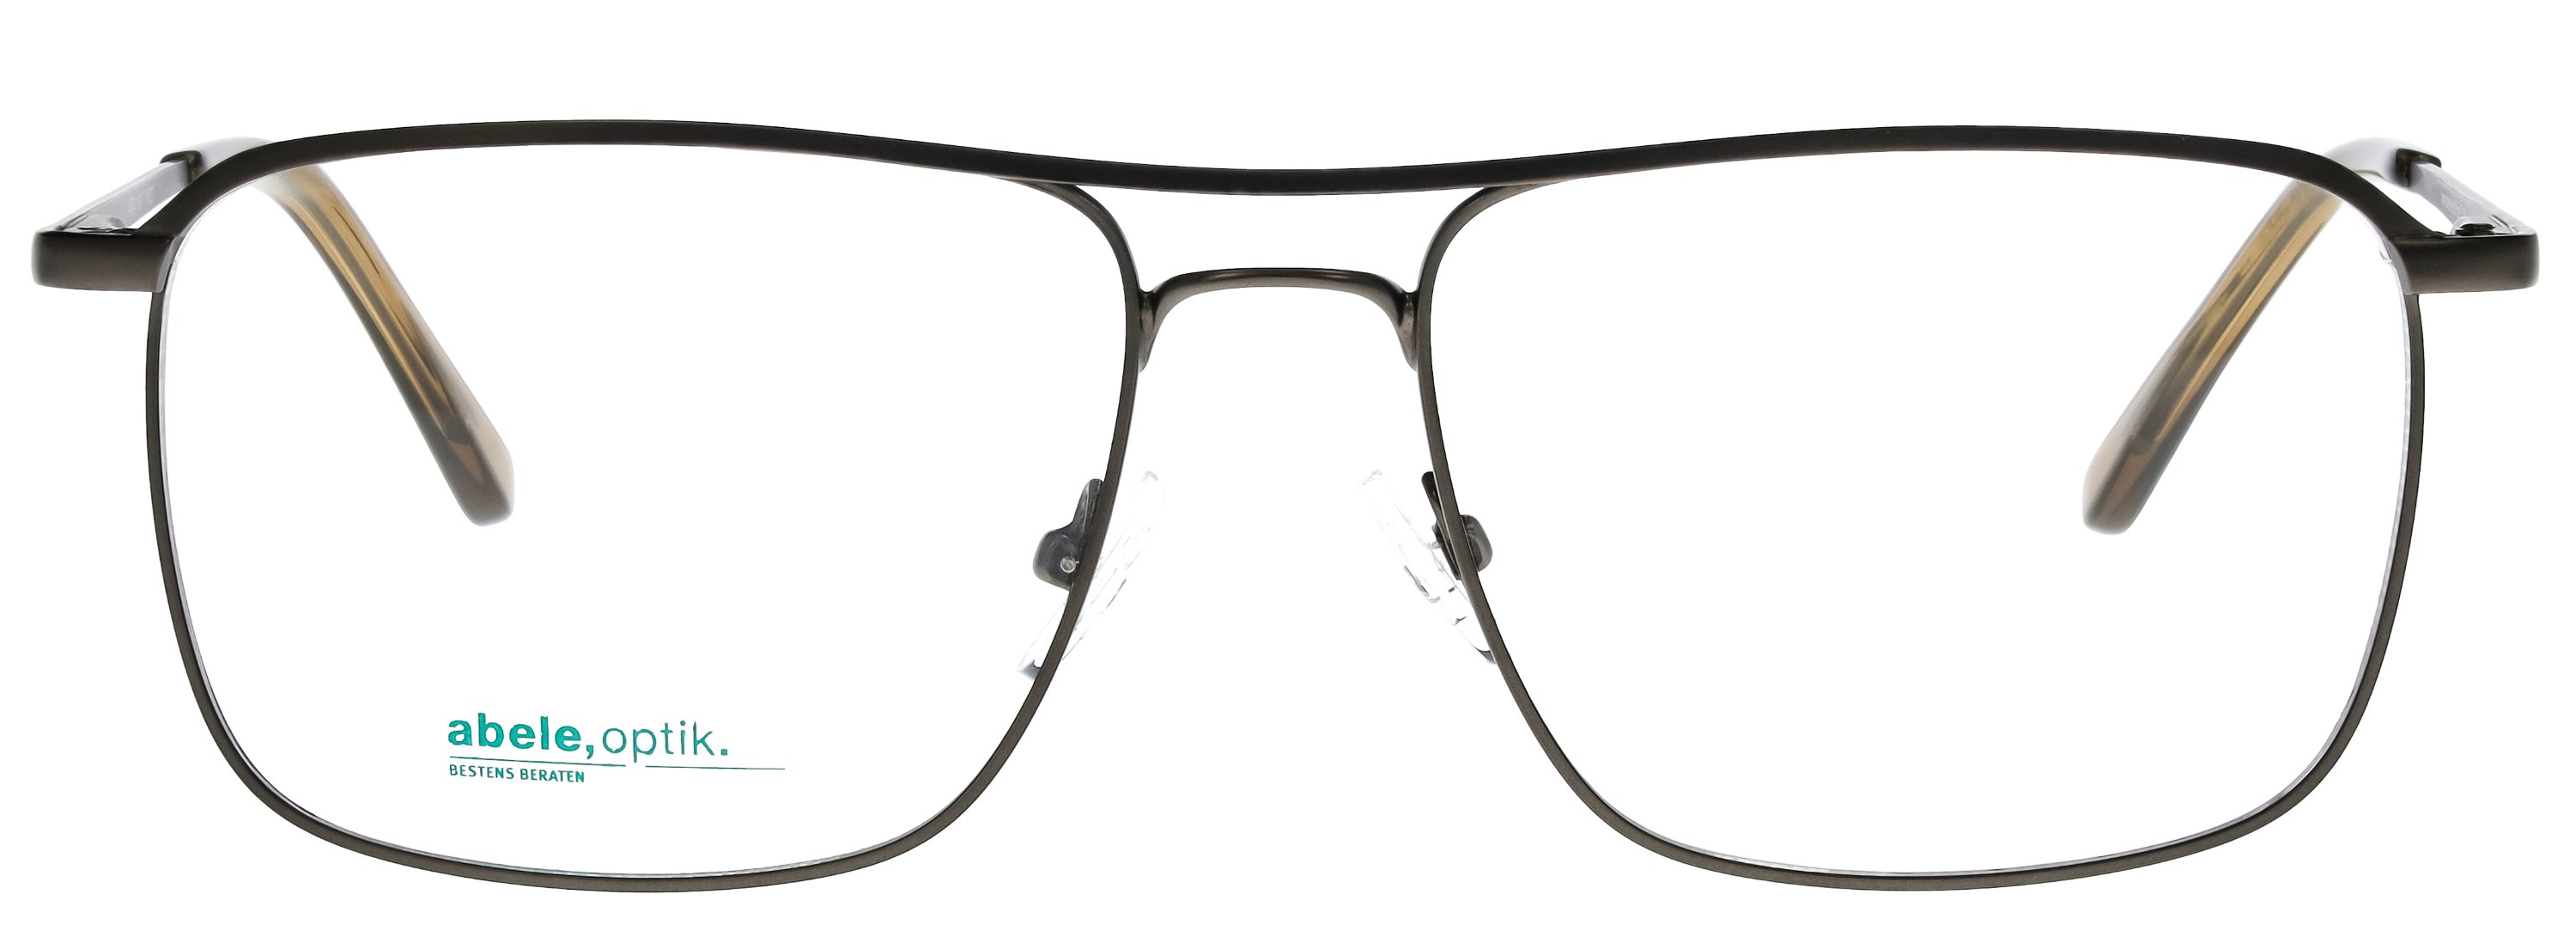 abele optik Brille für Herren in gun matt 147841